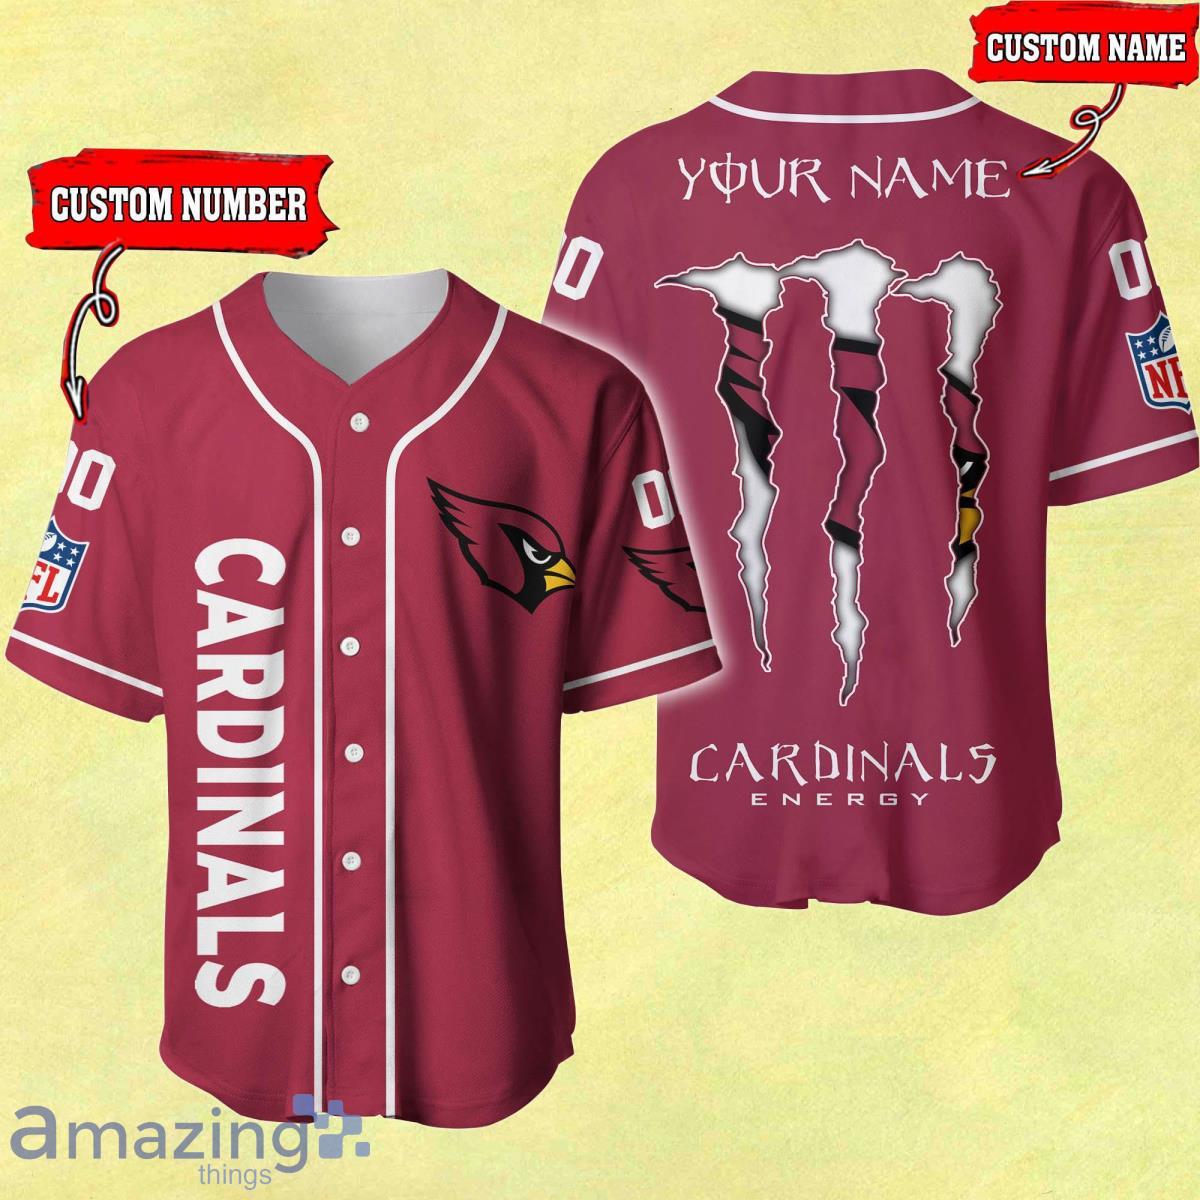 Custom Name Arizona Cardinals Baseball Jersey Shirt Unique Gift